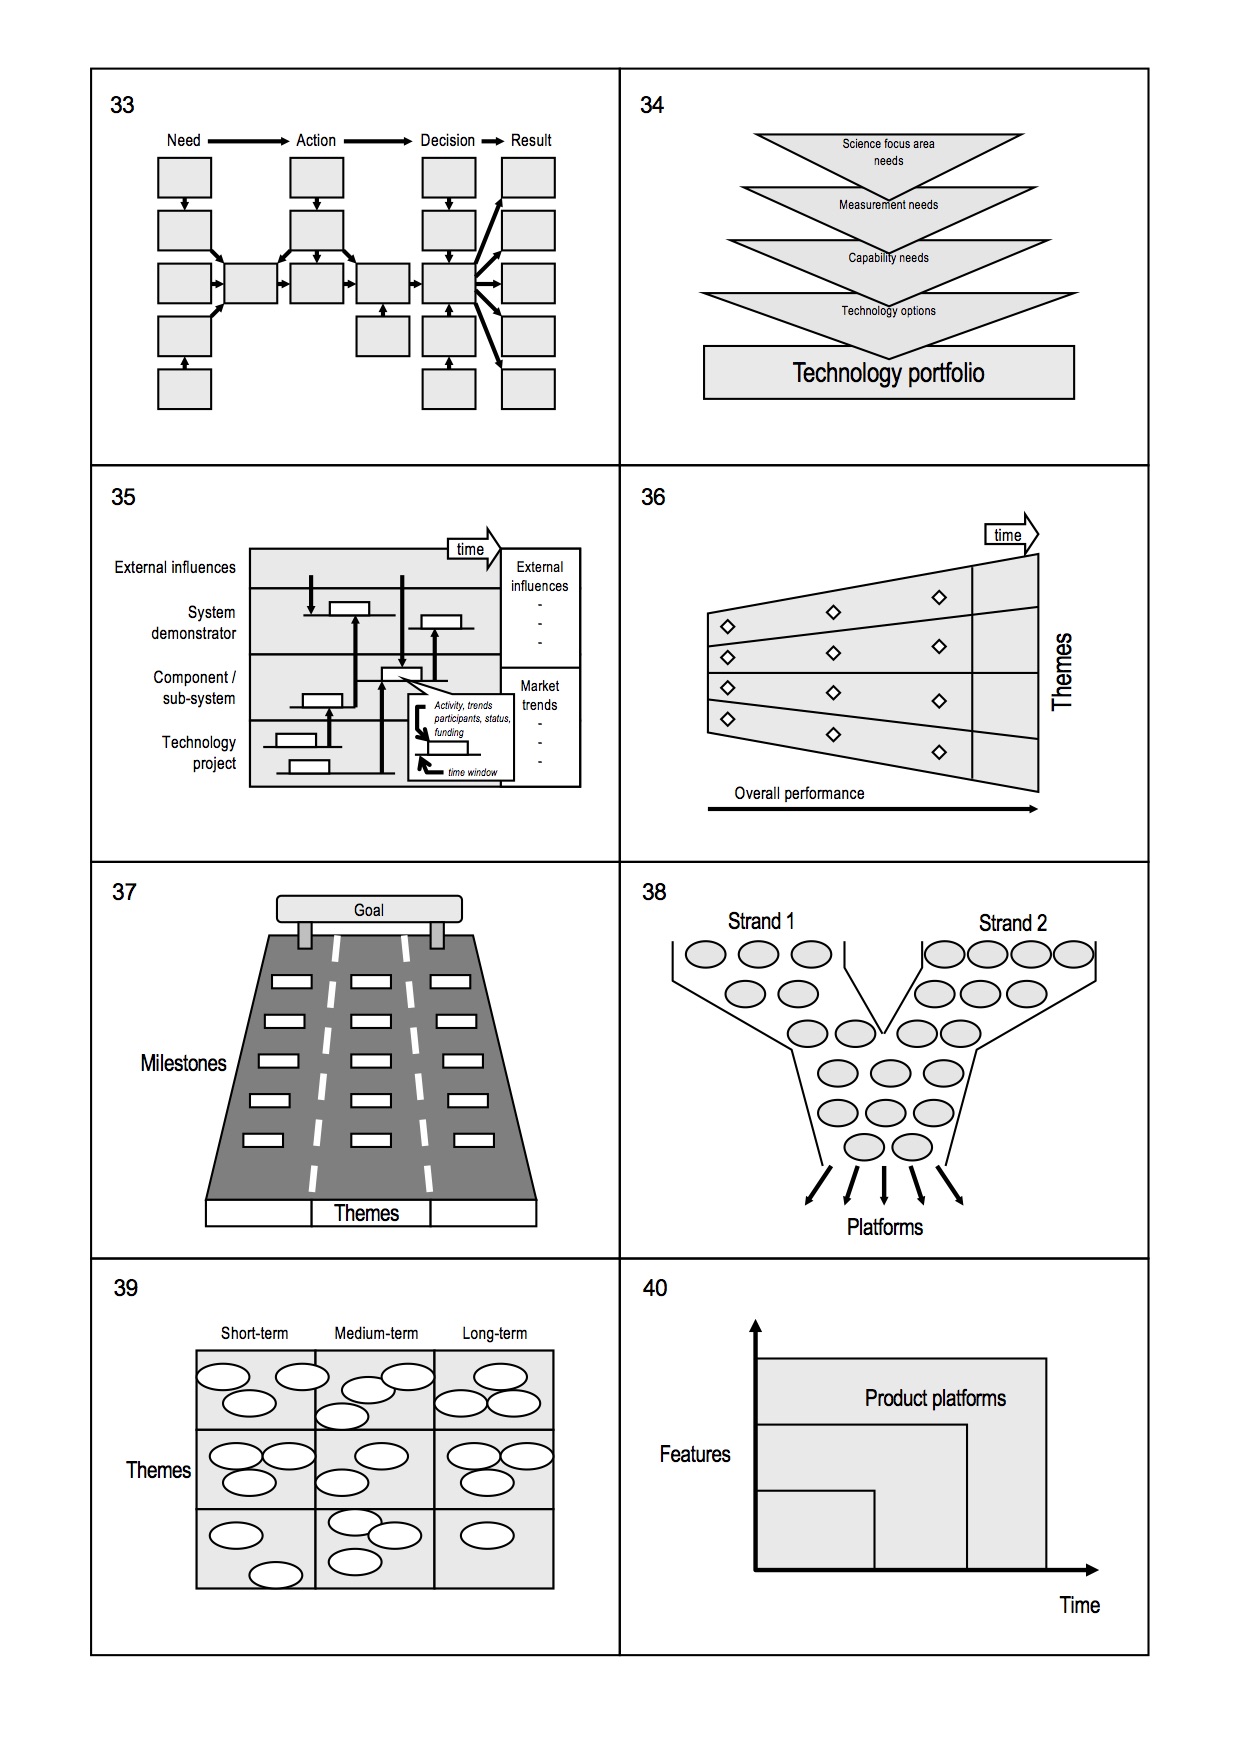  Example roadmap formats (Phaal et al., 2010) 